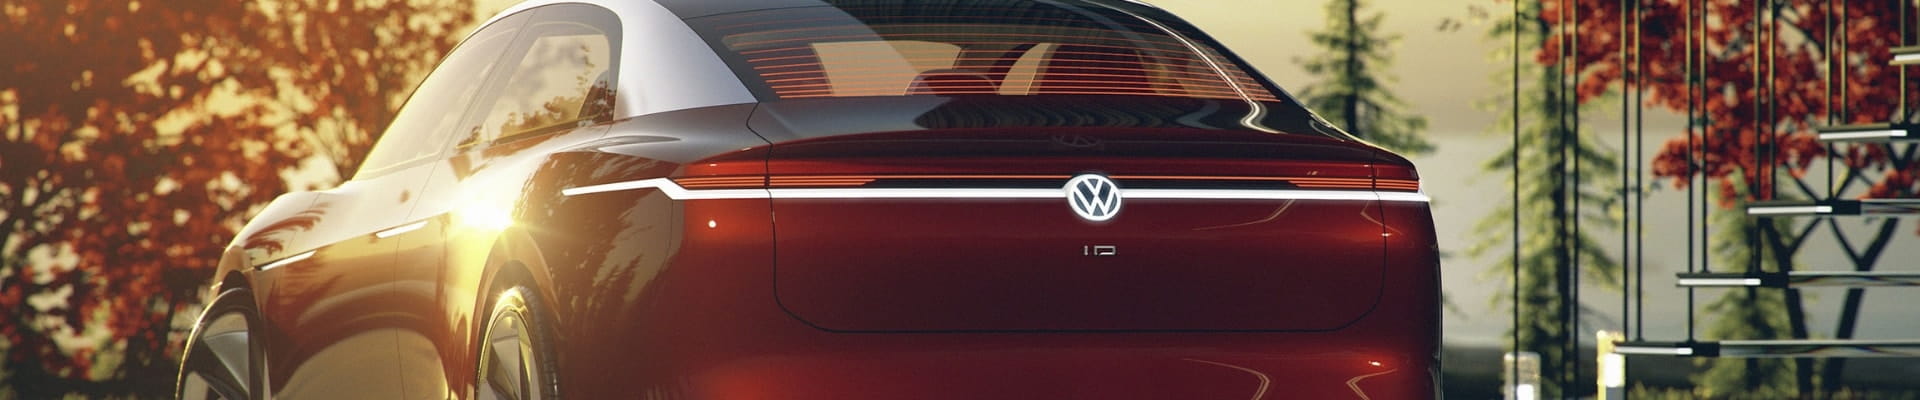 Volkswagen private lease